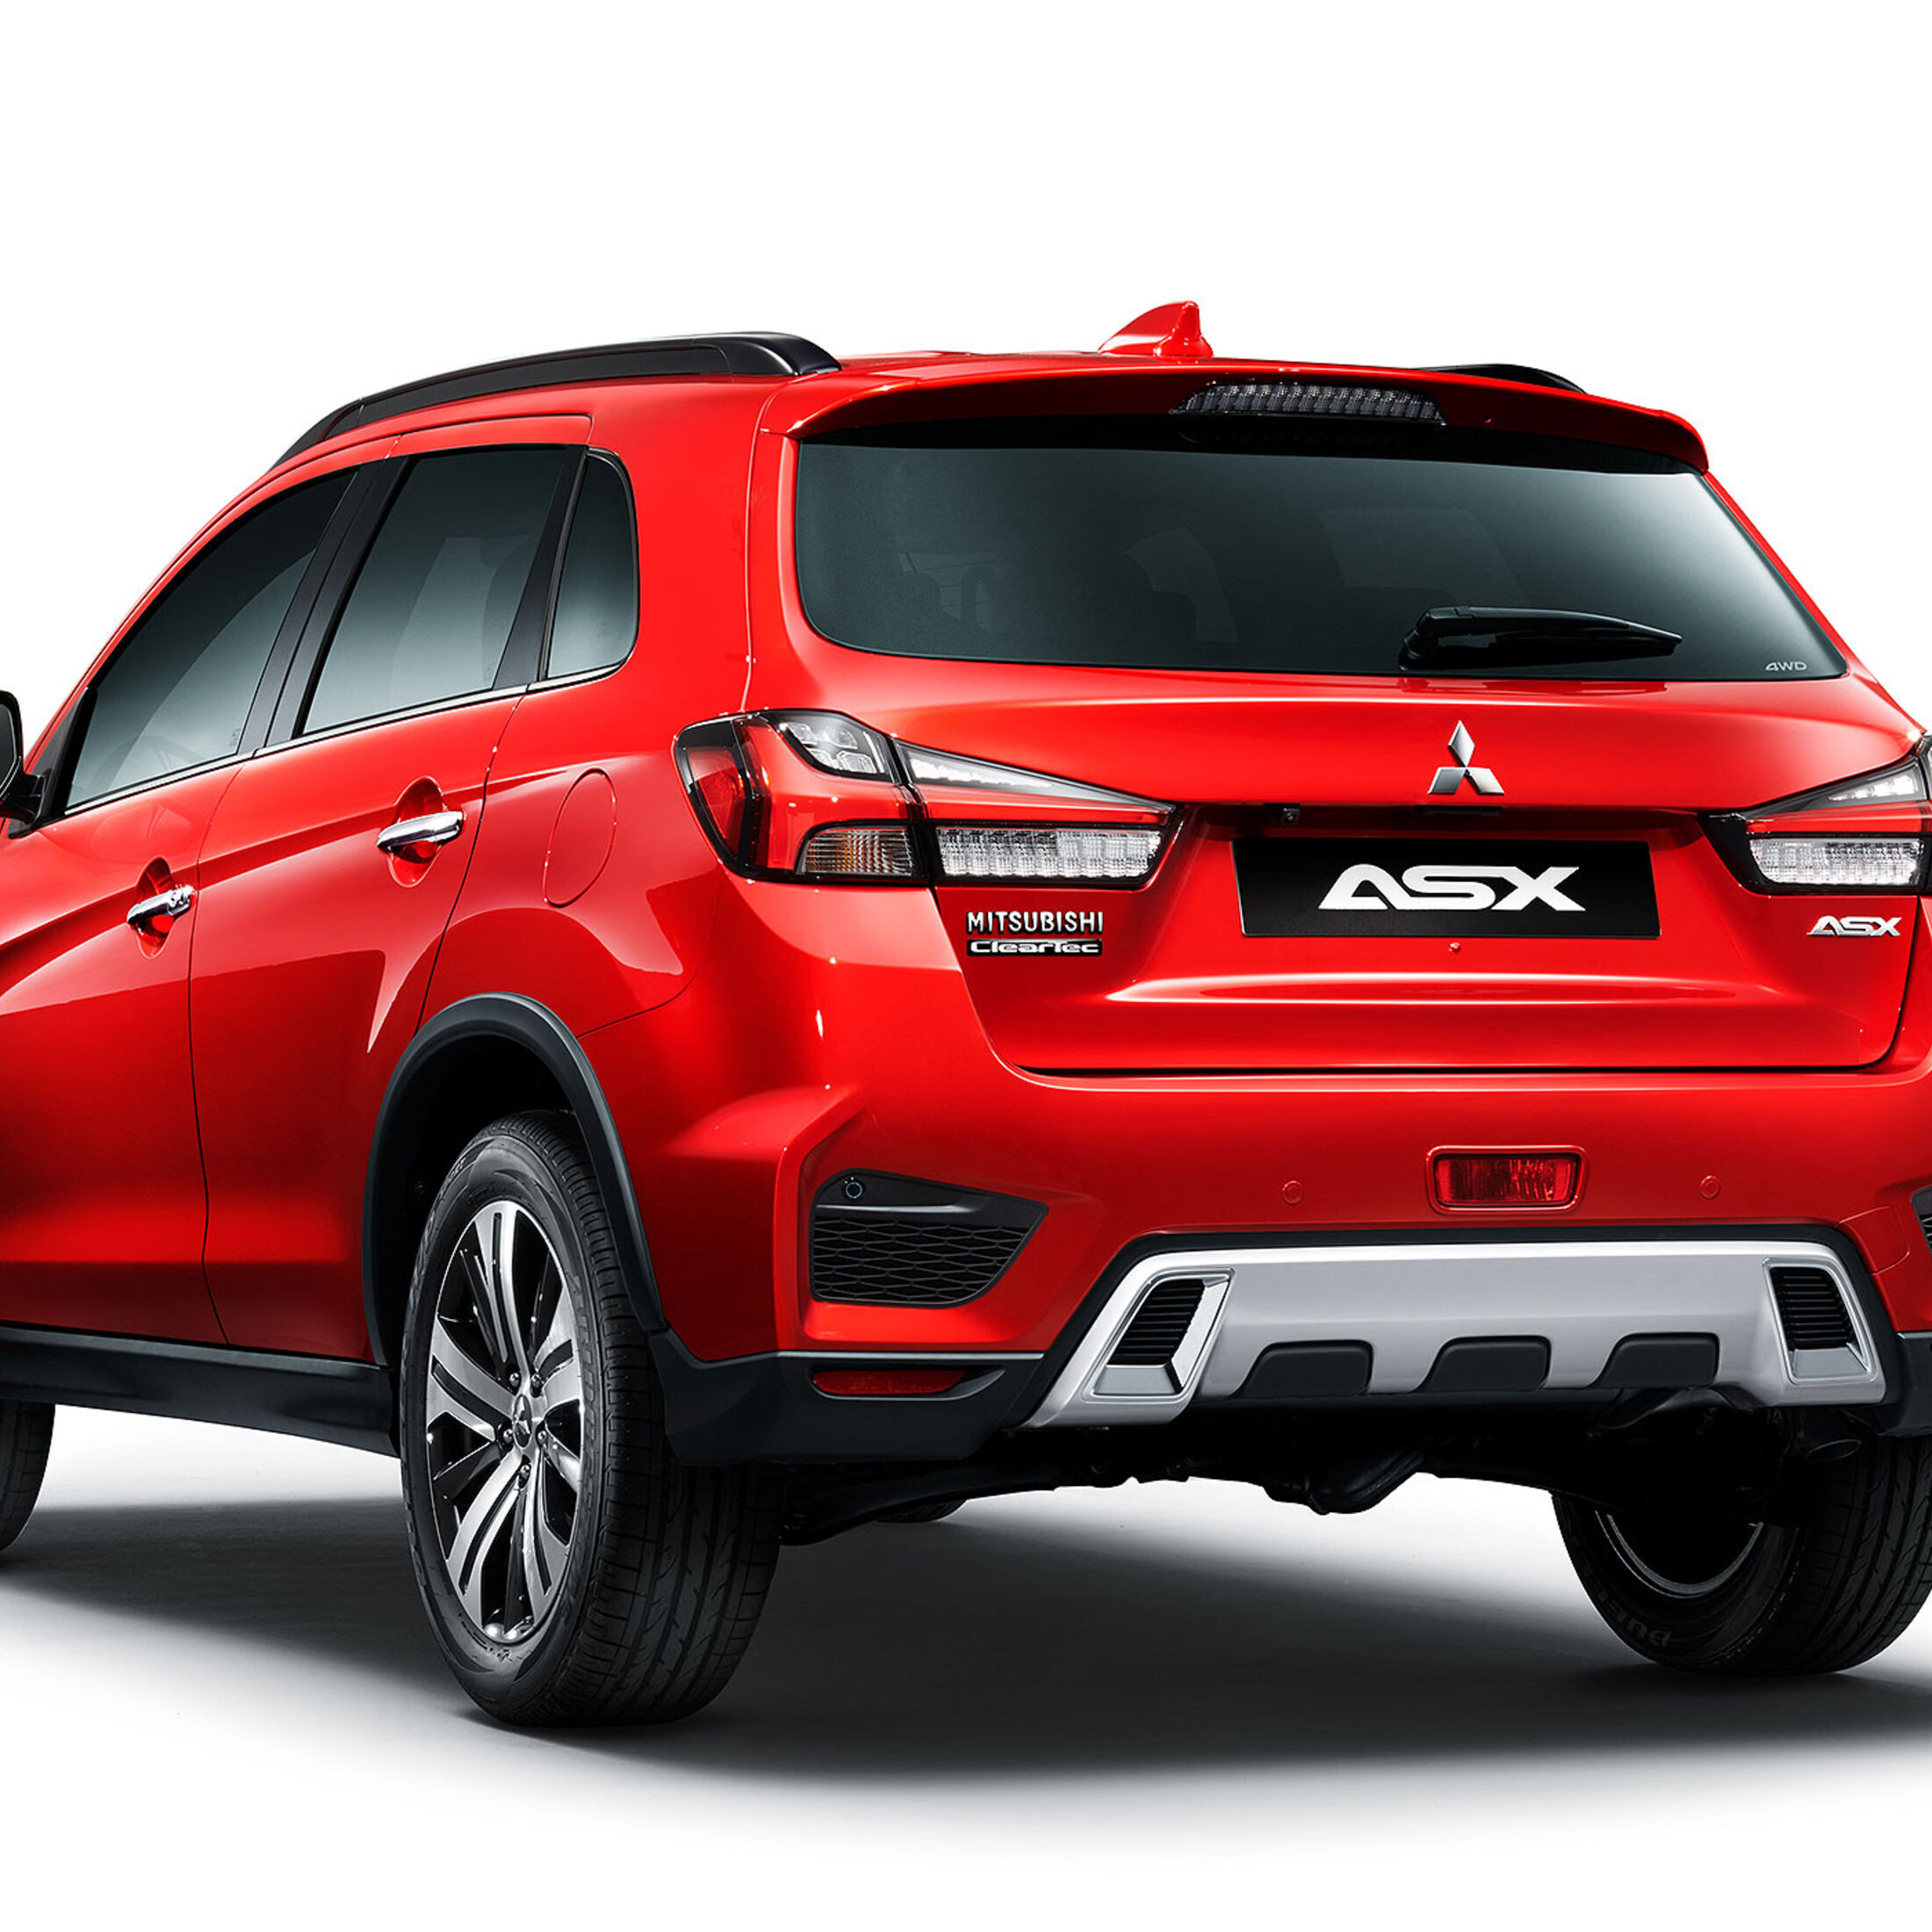 https://imgr1.auto-motor-und-sport.de/Mitsubishi-ASX-Facelift-2019-jsonLd1x1-642ccb65-1423587.jpg